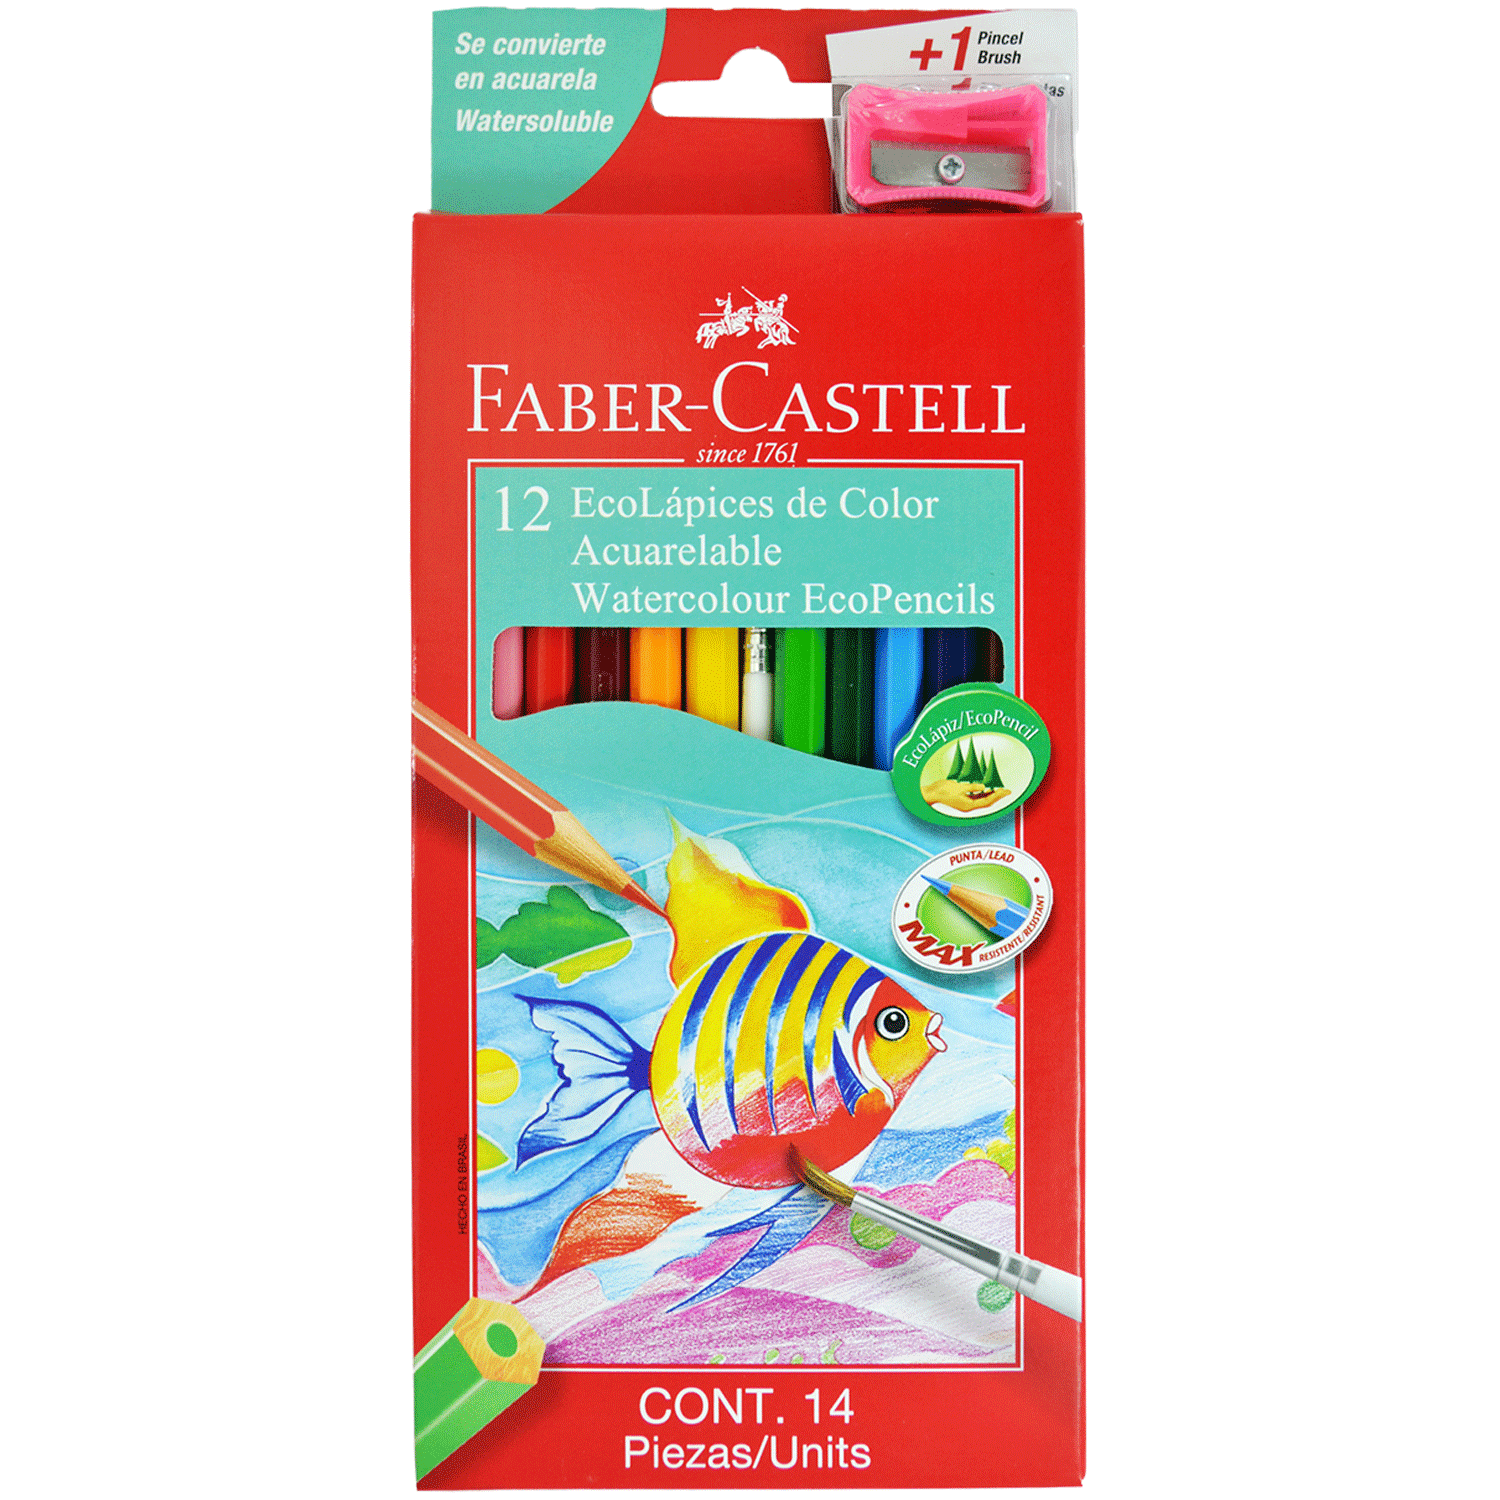 Lápices de colores Acuarelables Faber Castell 12, 24 colores - Suminmar